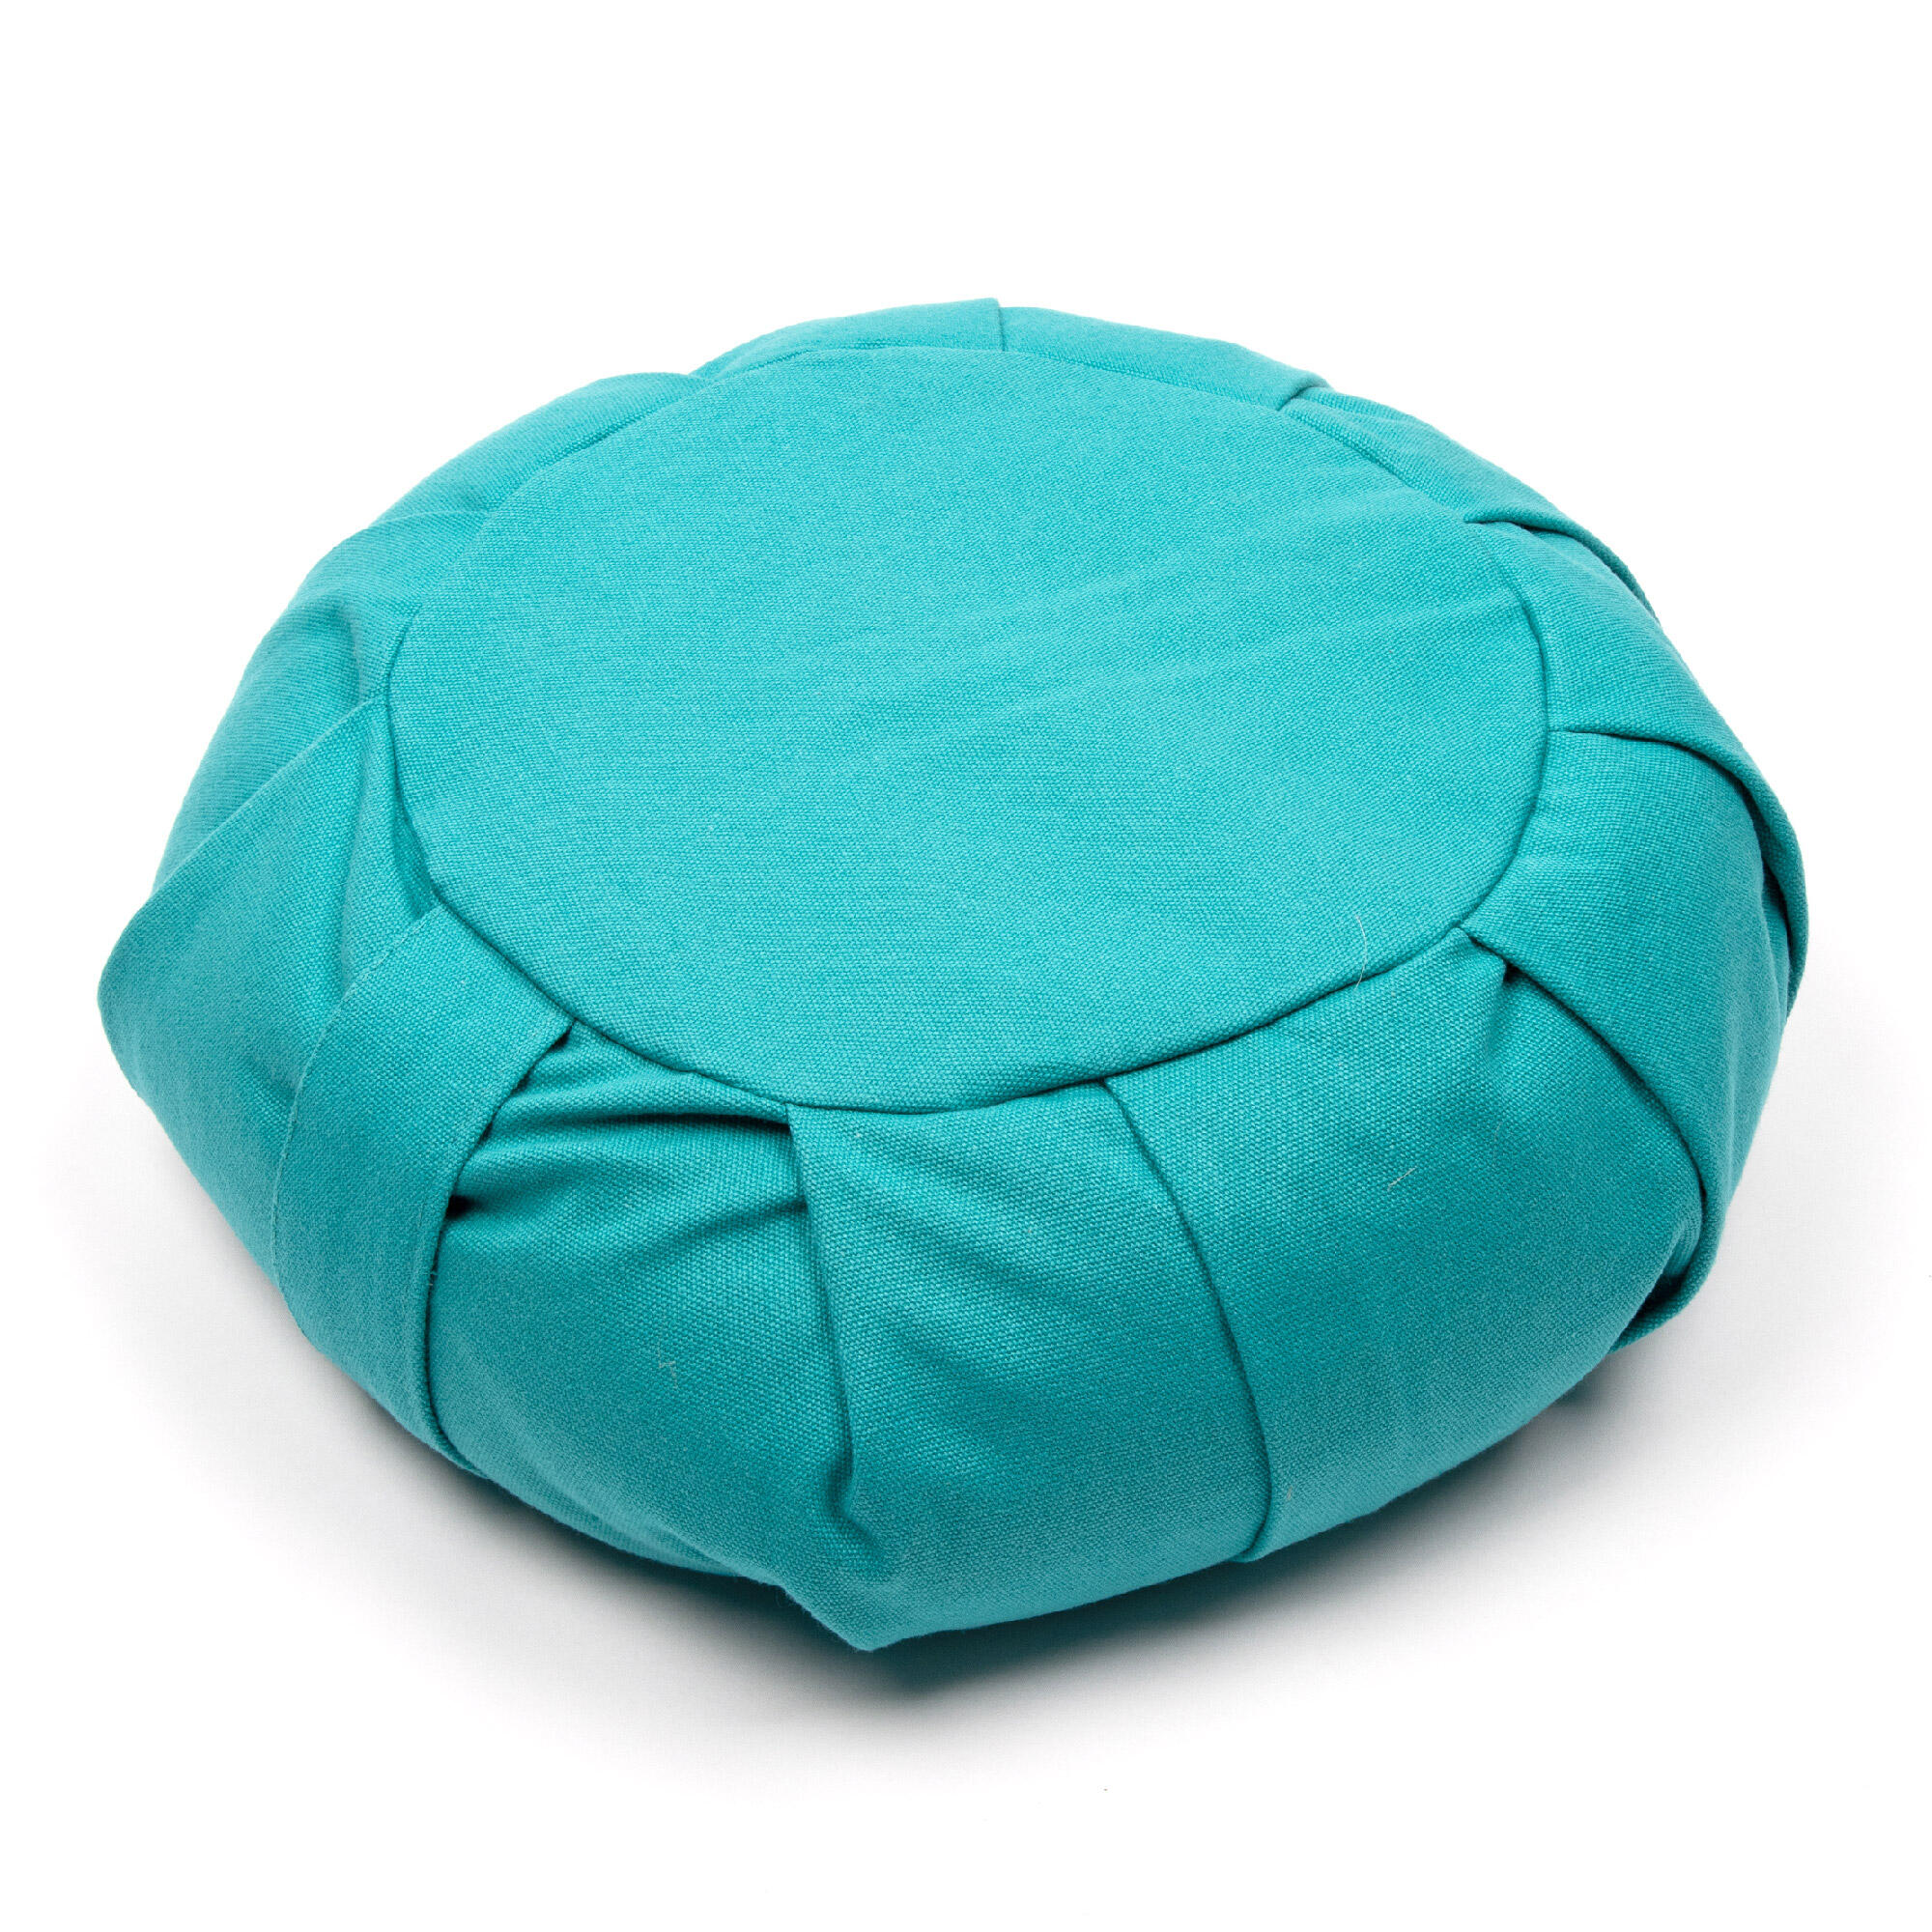 Myga Zafu Meditation Cushion - Turquoise 1/7